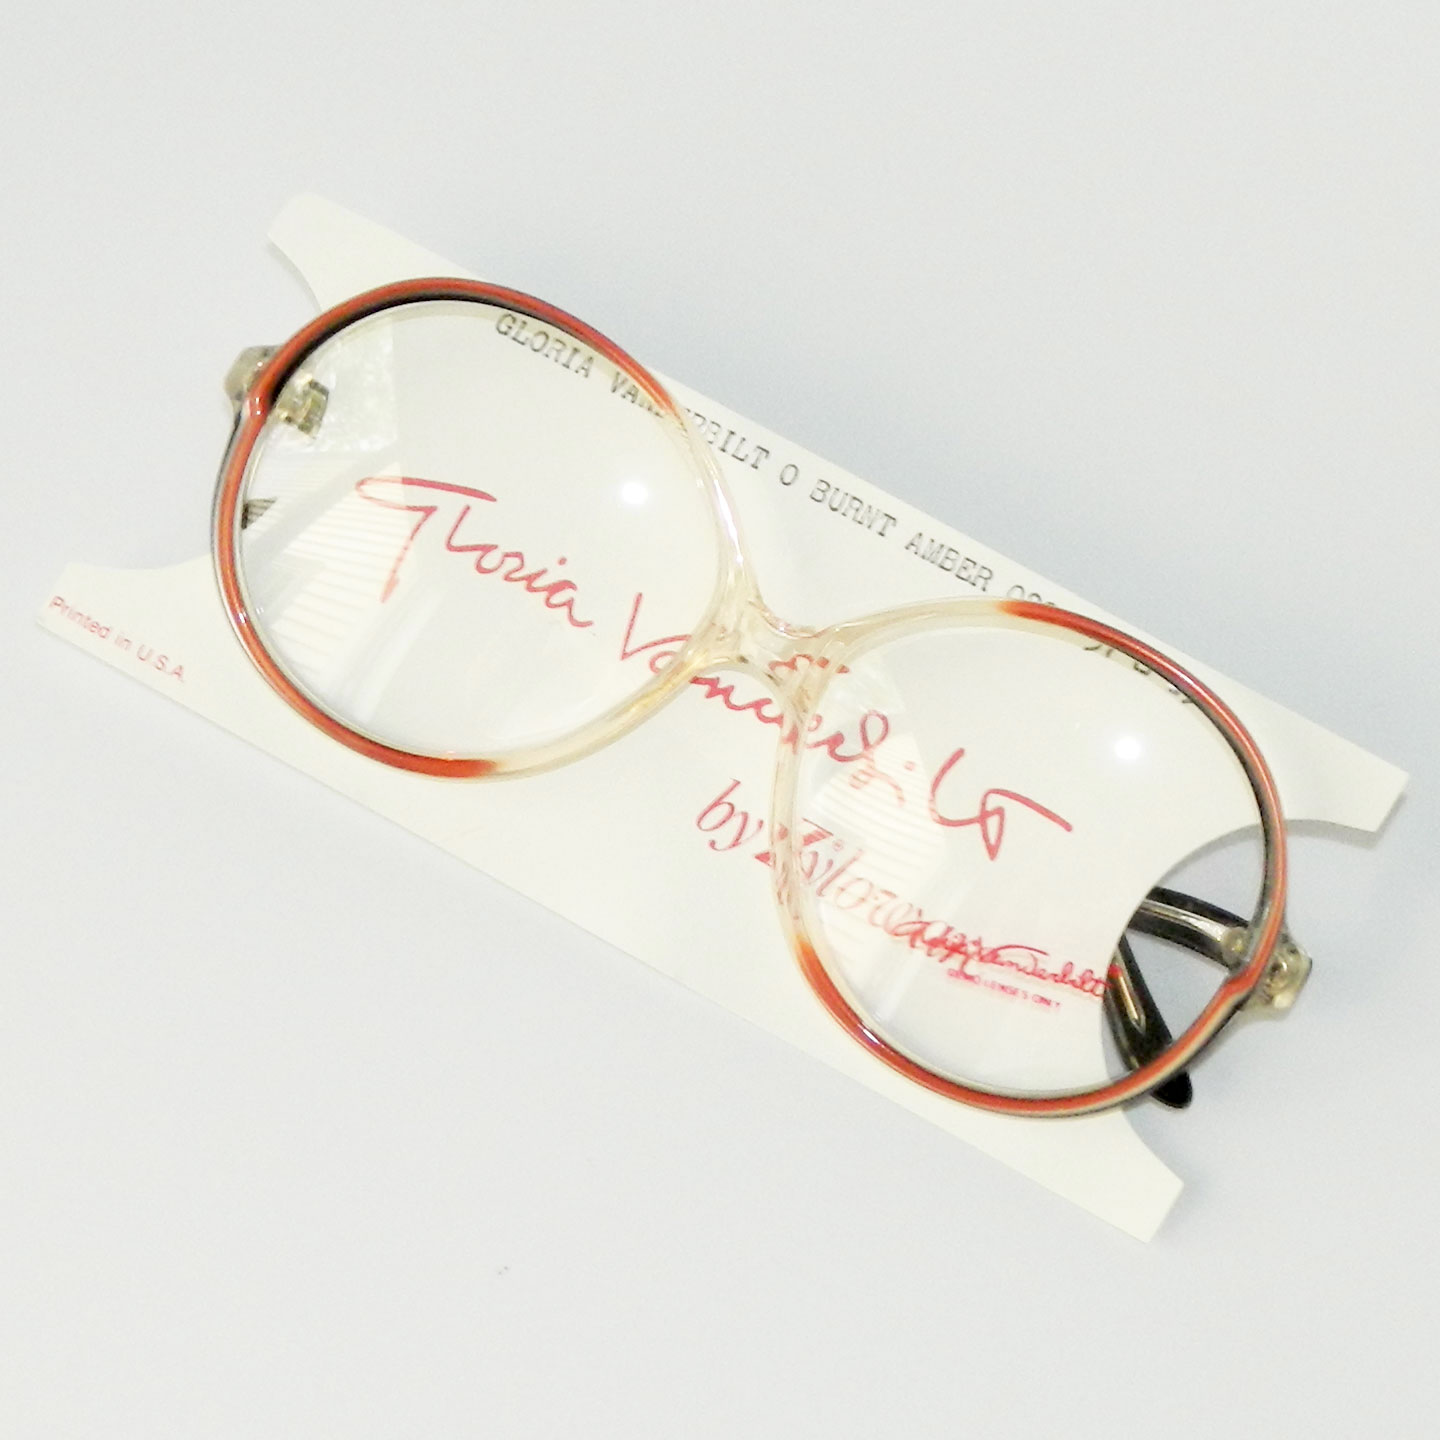 1980's Gloria Vanderbilt eyeglass frames